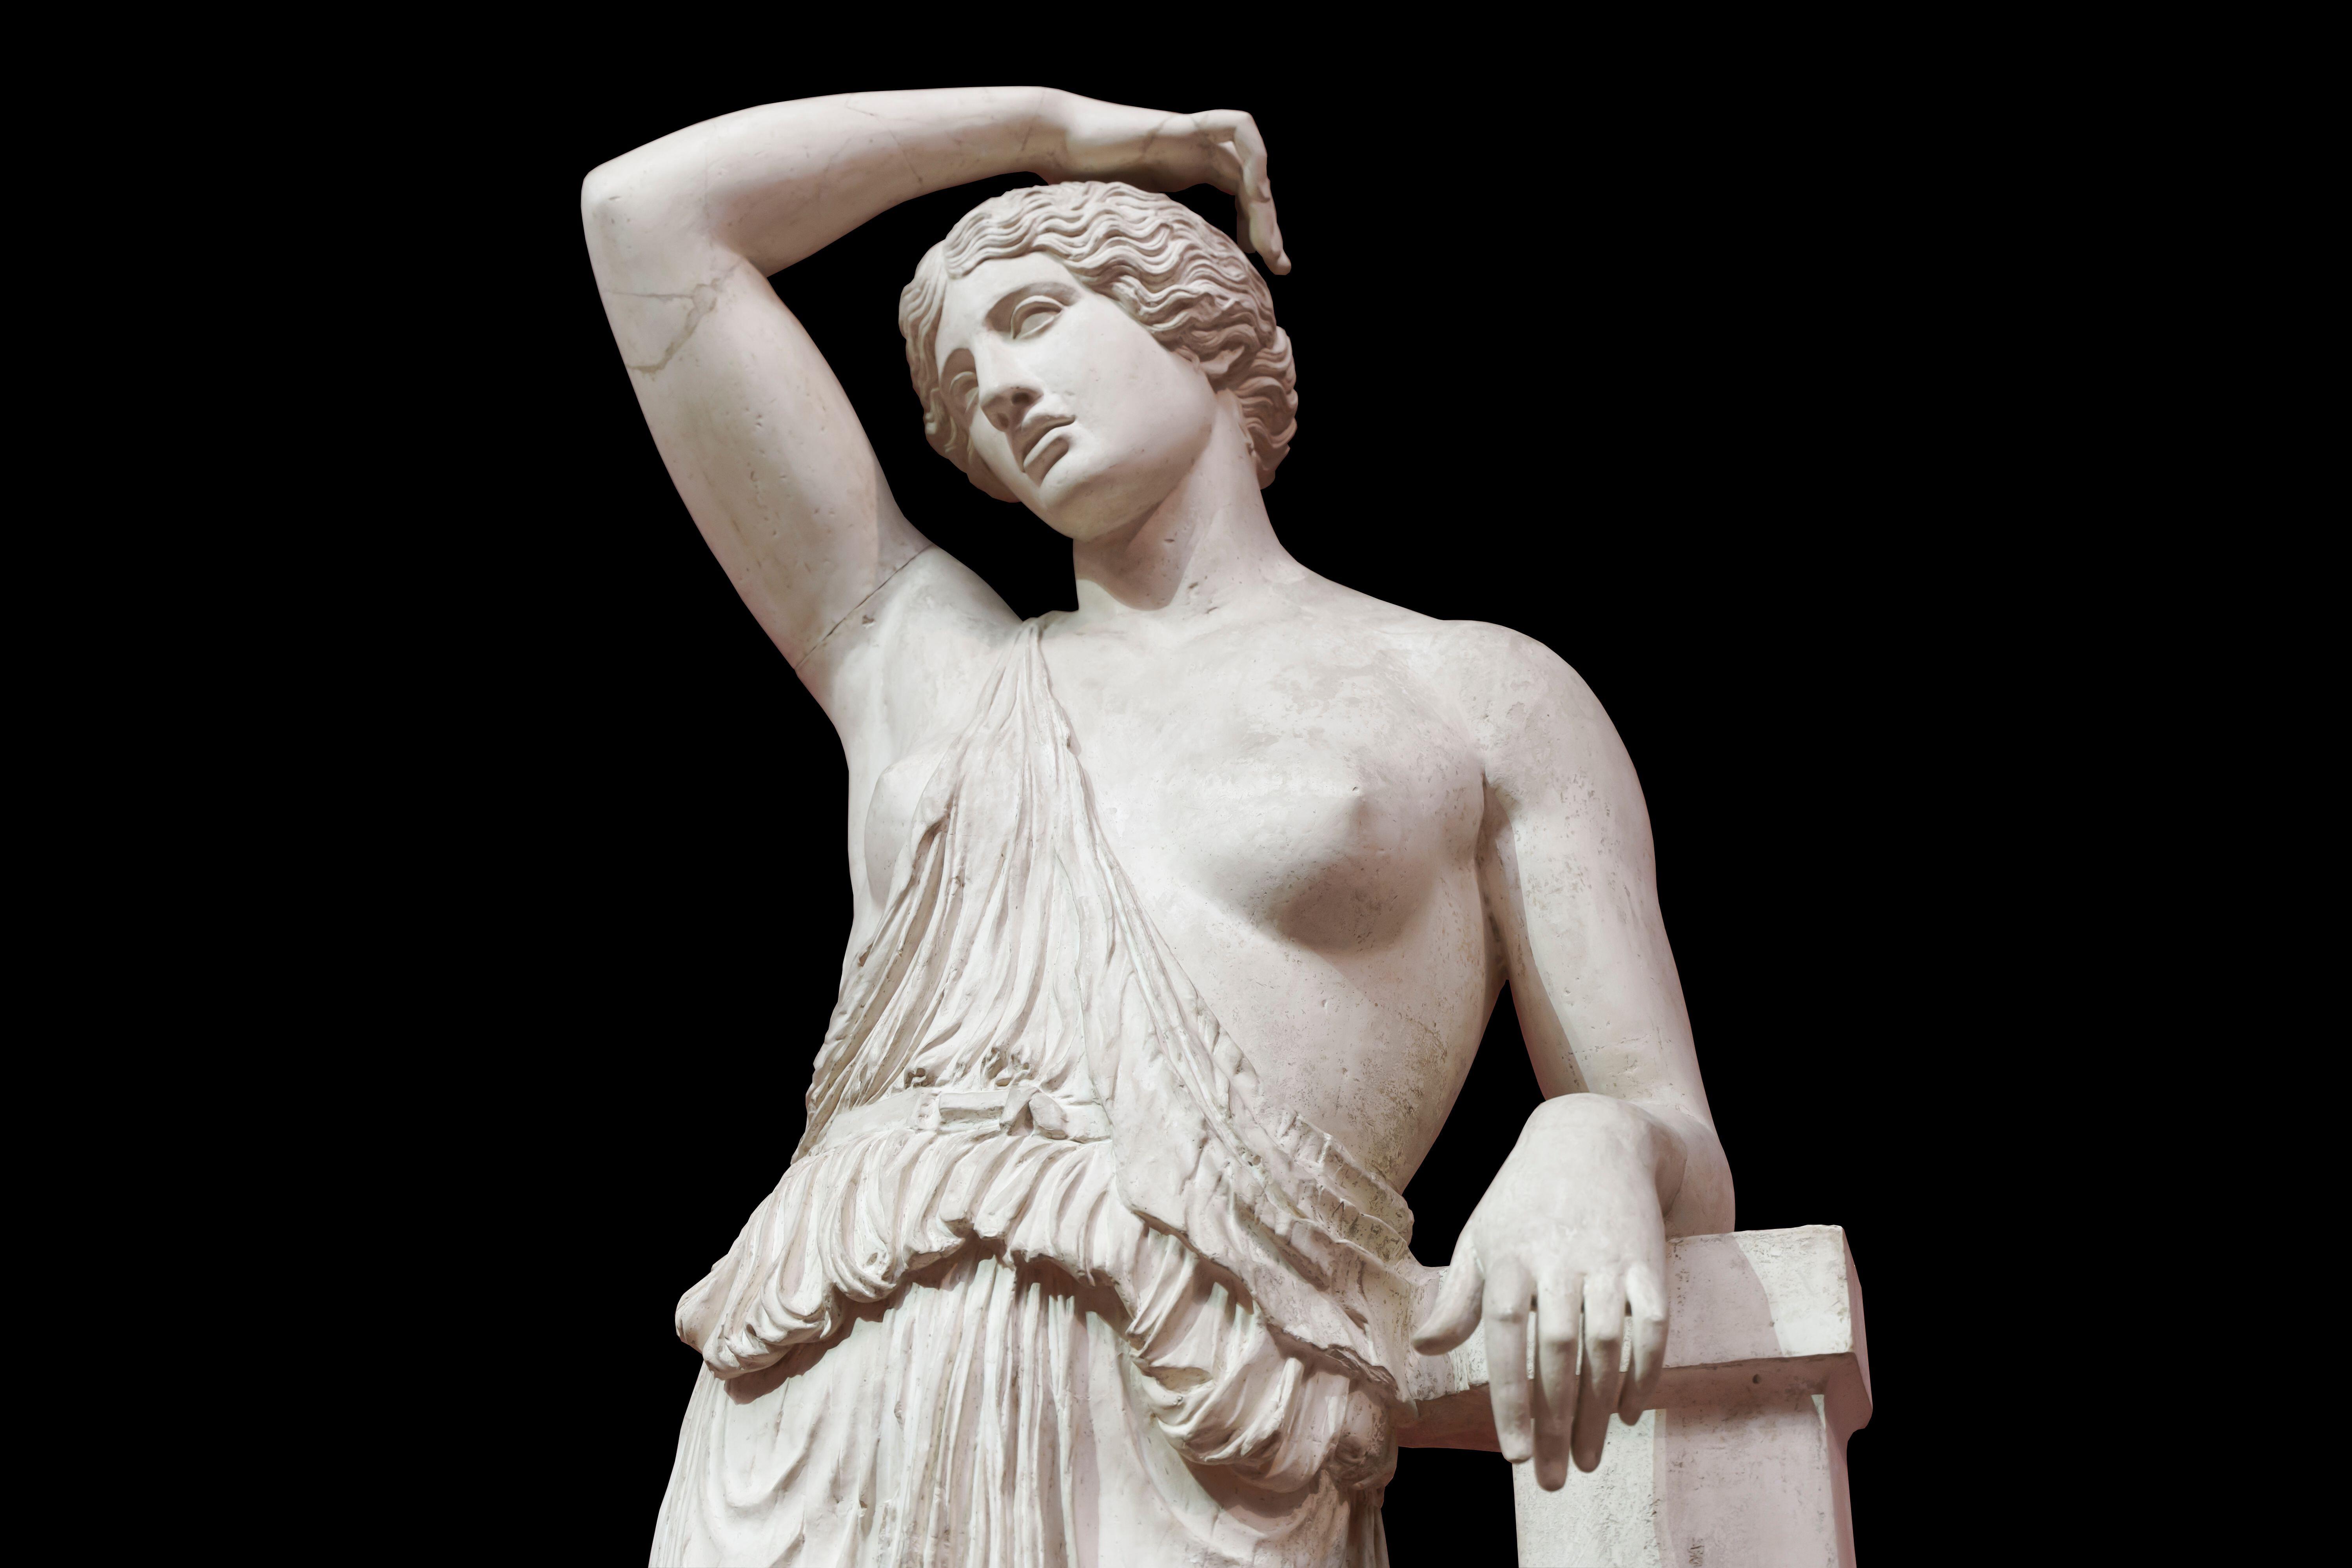 A classical antique sculpture of a woman